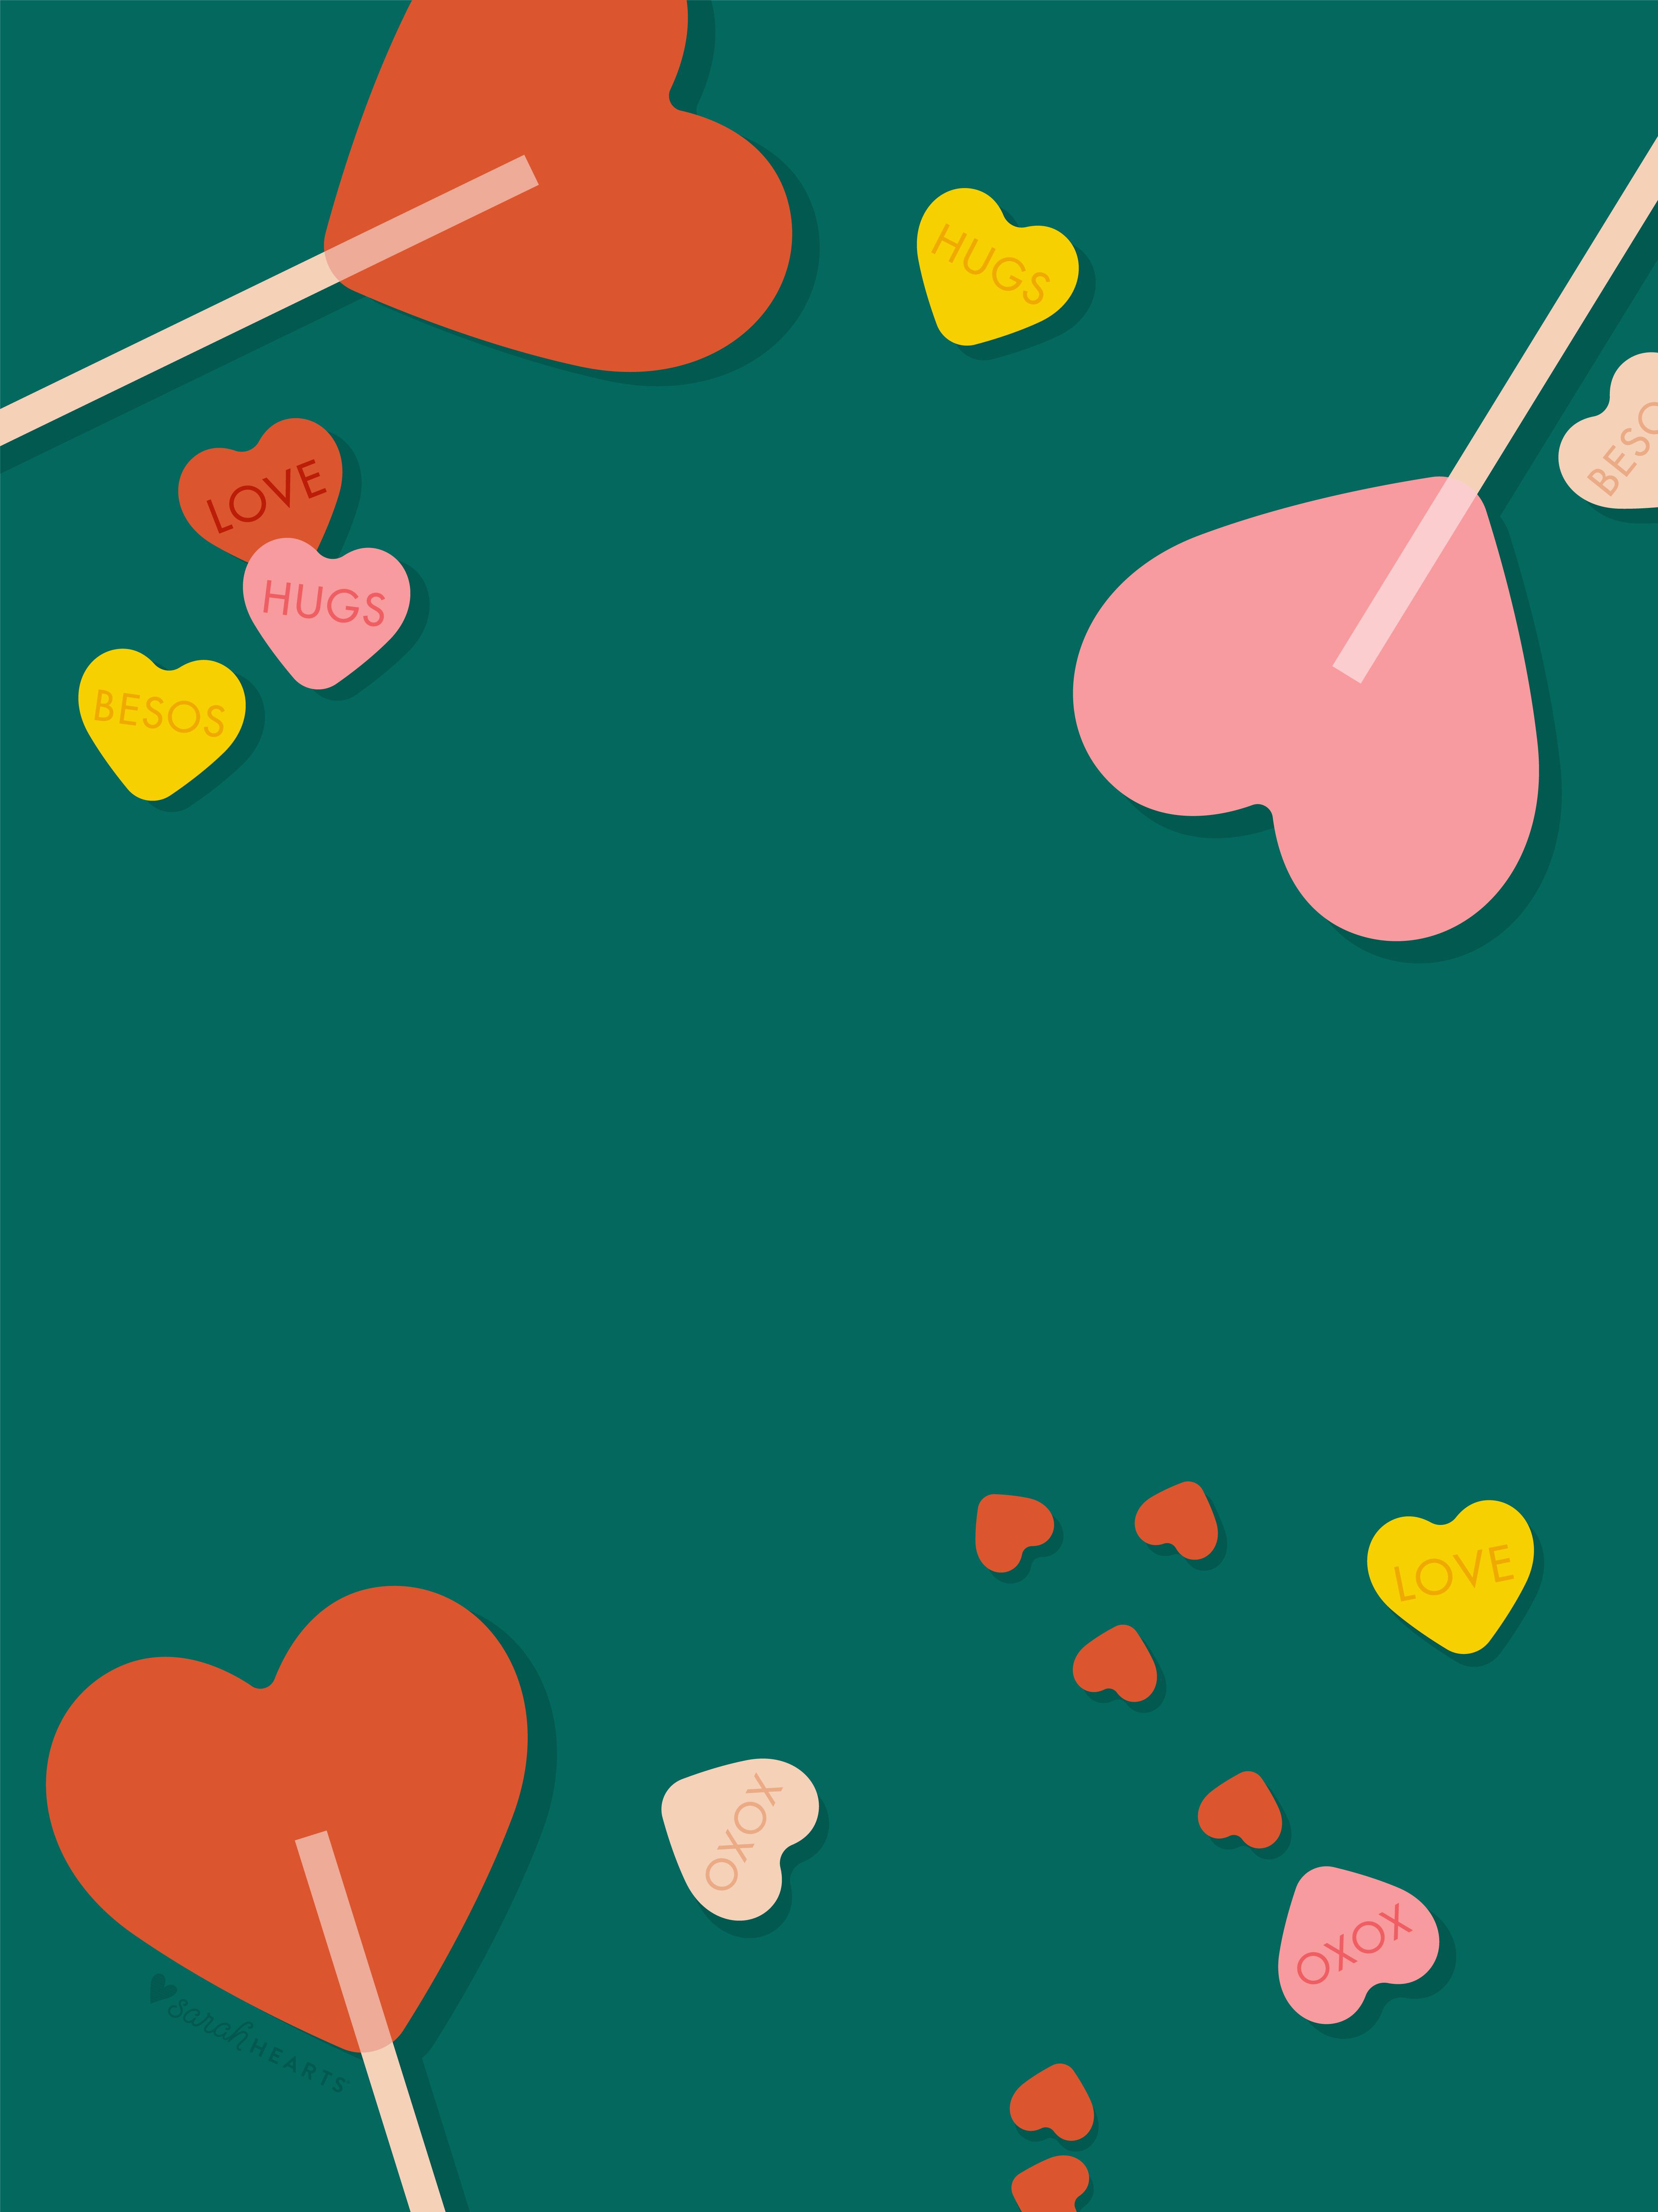 February 2020 Valentines Candy Calendar Wallpaper